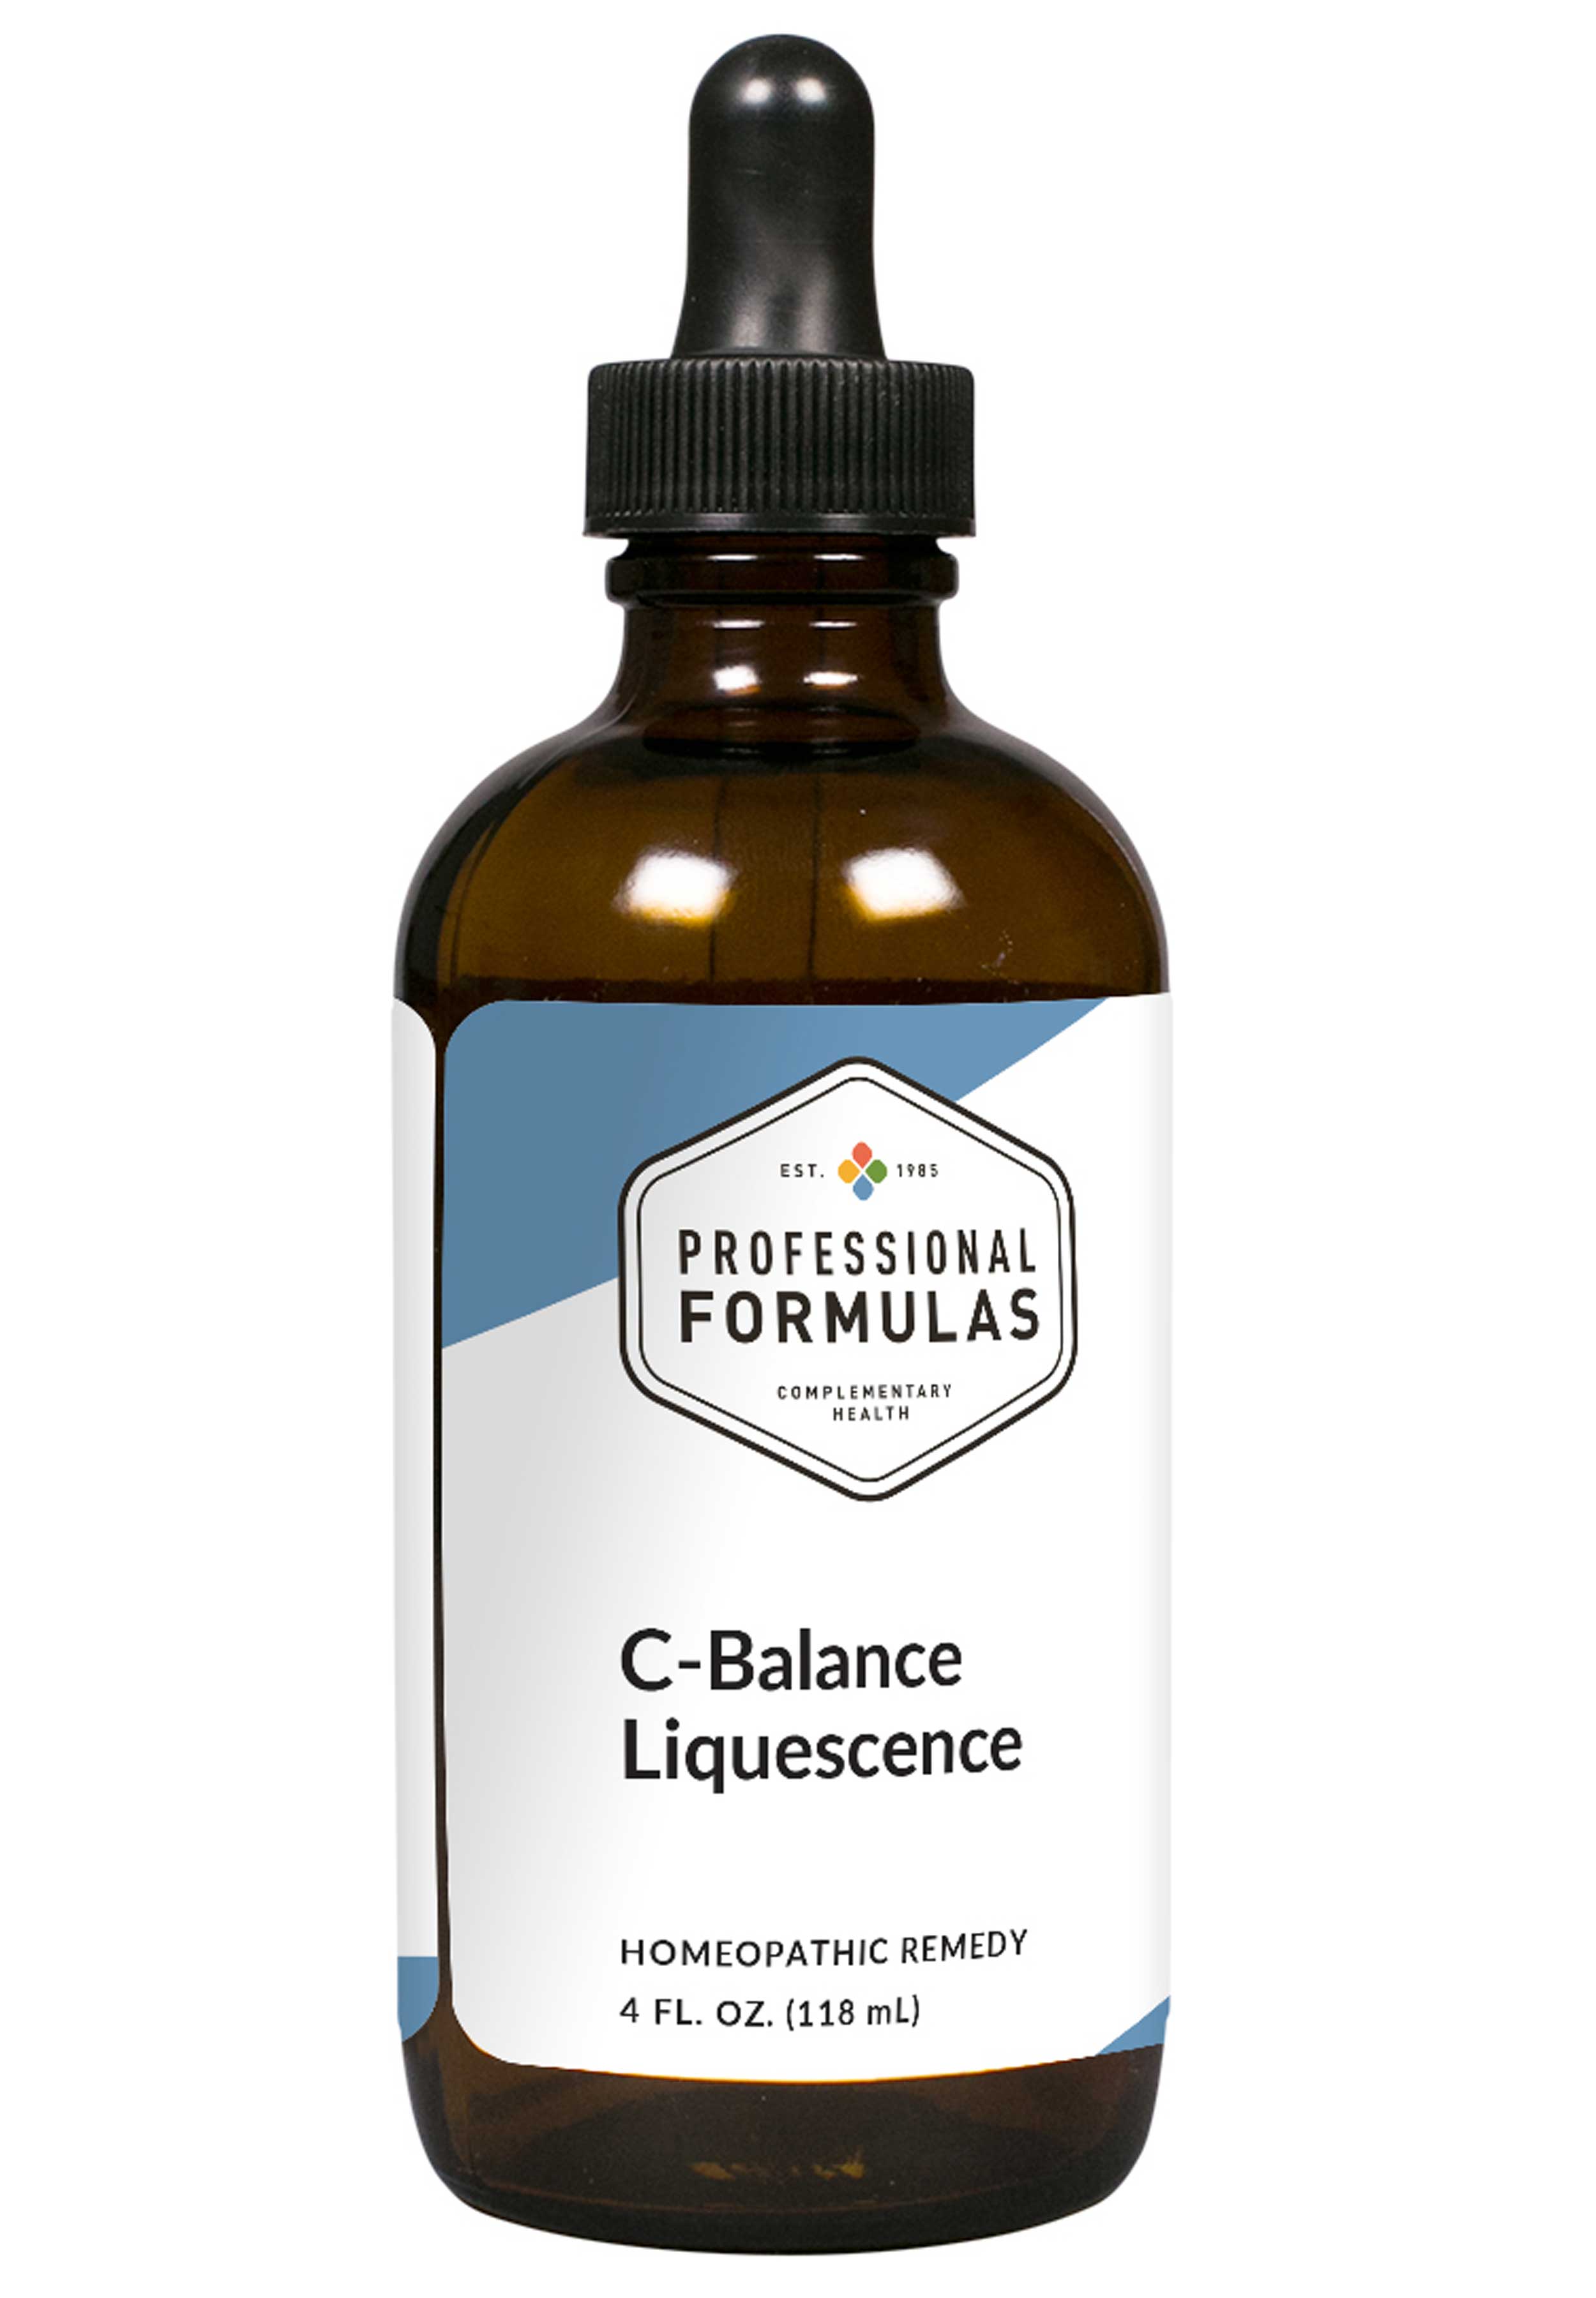 Professional Formulas C-Balance Liquescence